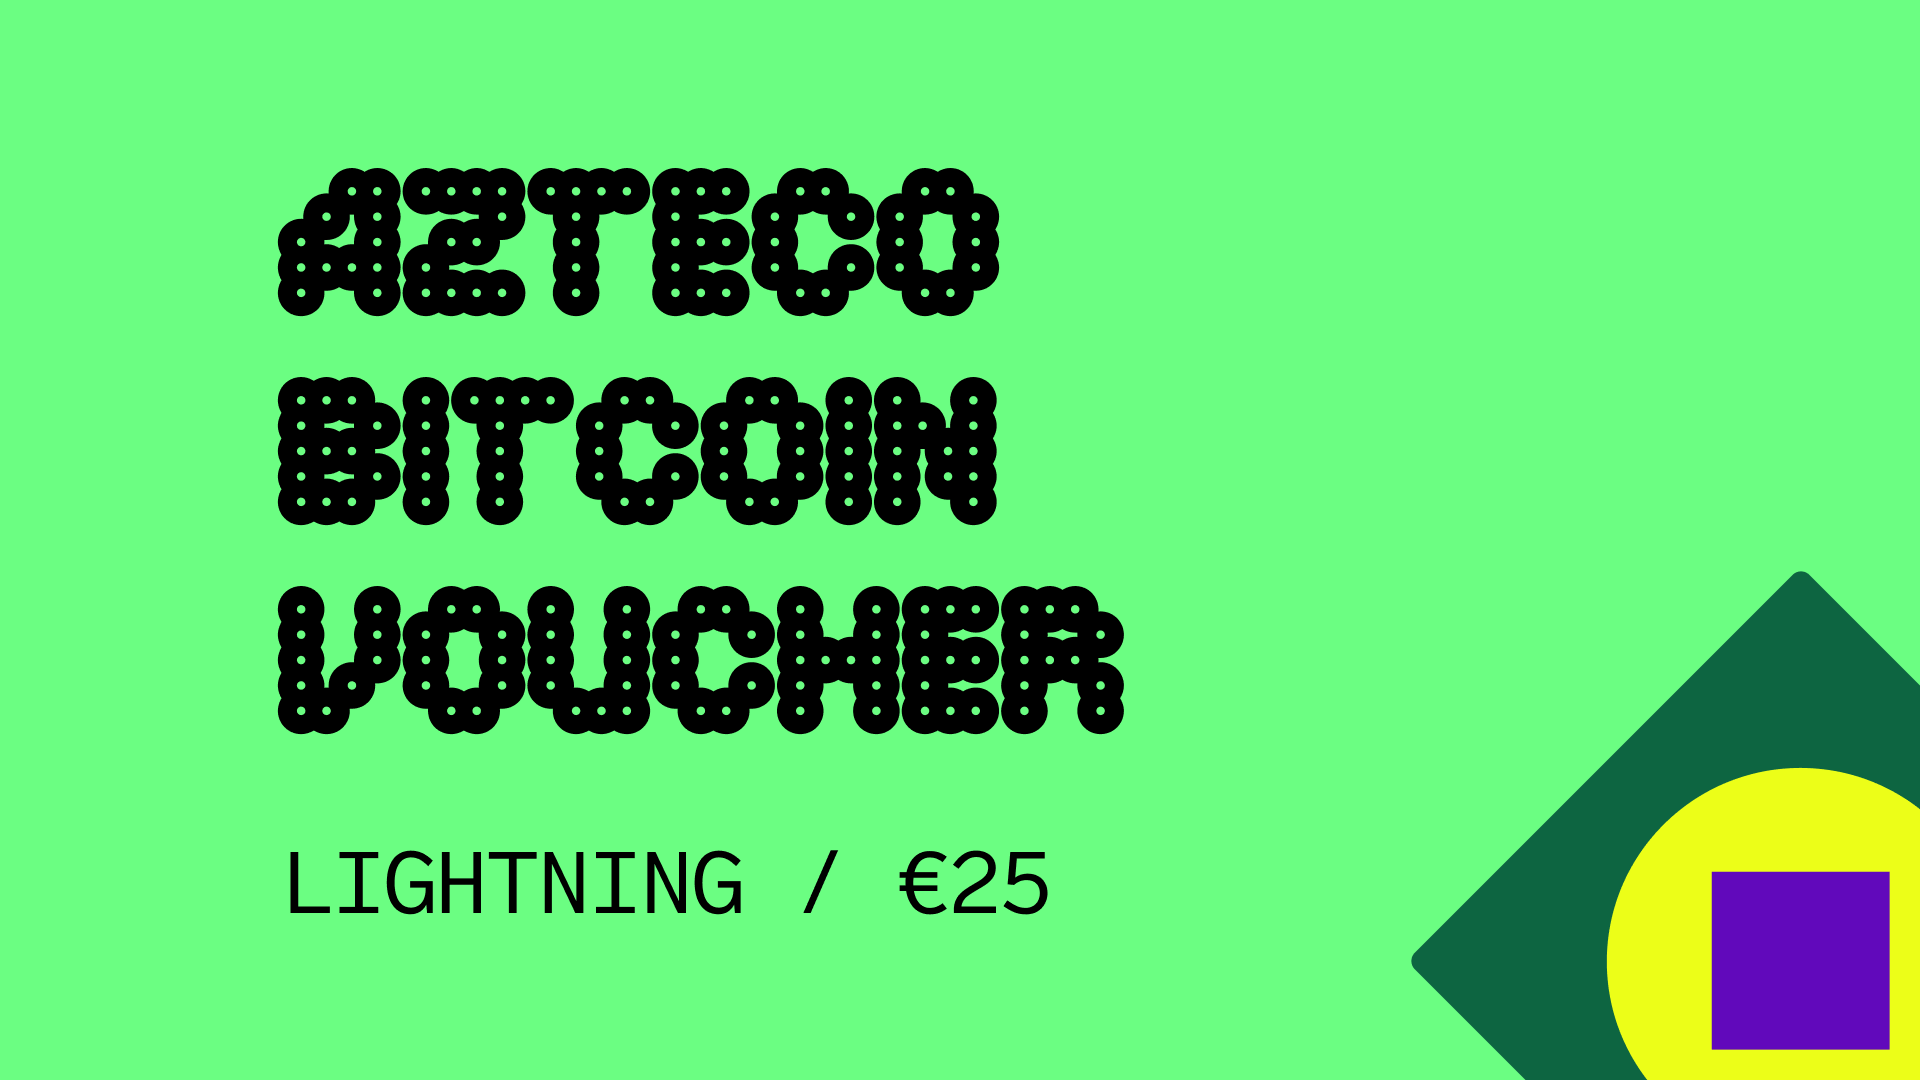 Azteco Bitcoin Lighting €25 Voucher 28.25$